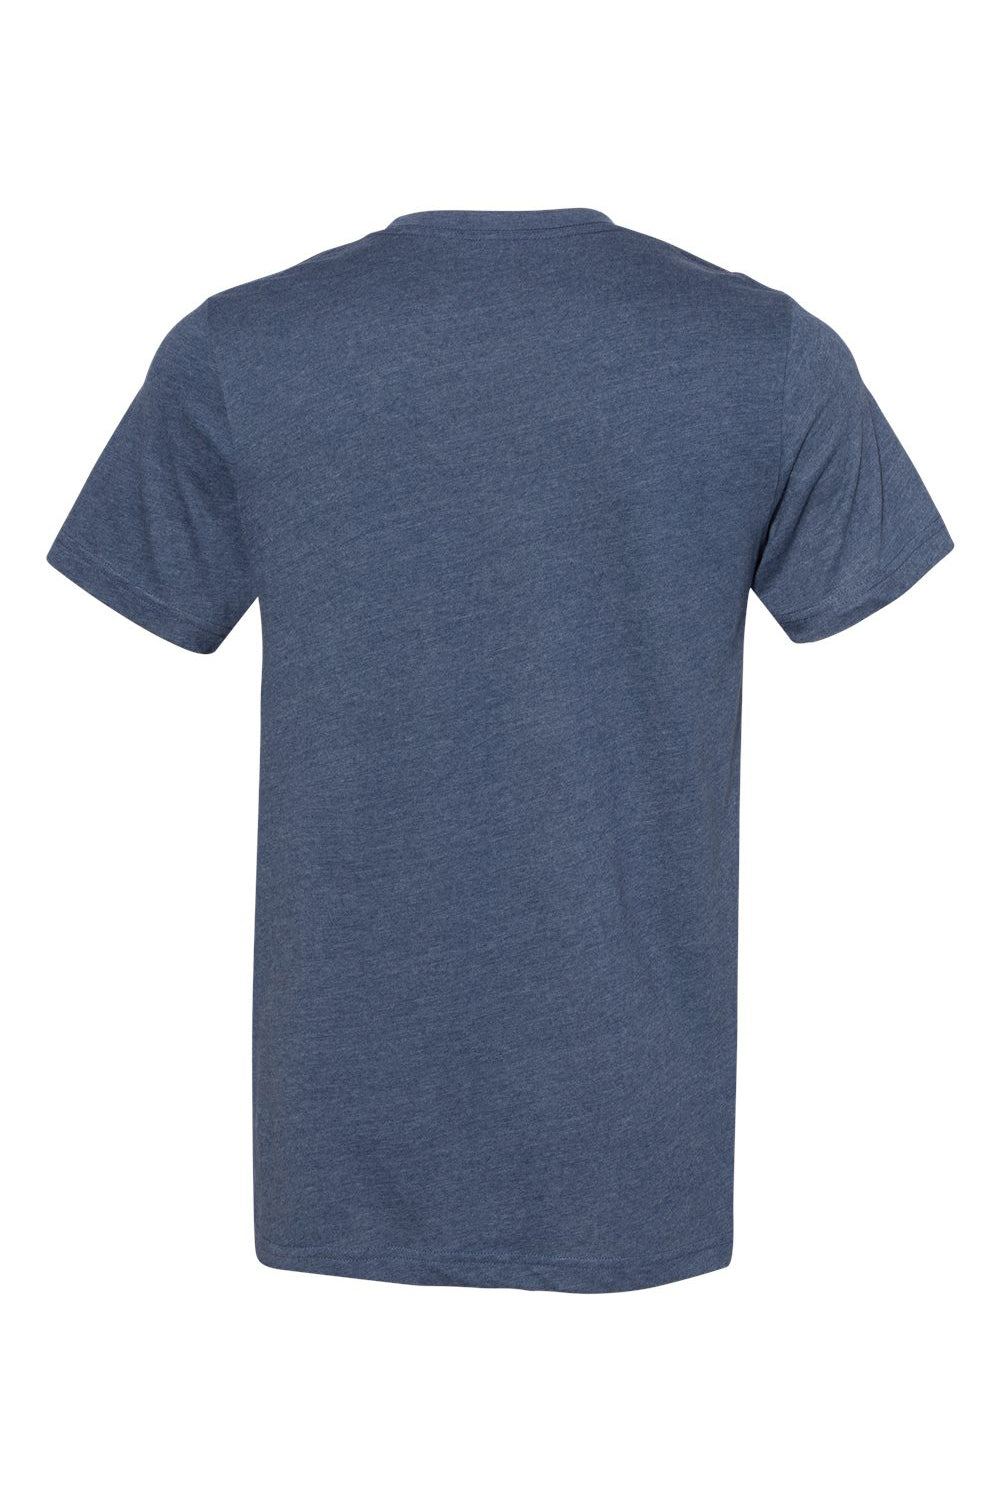 Bella + Canvas BC3301/3301C/3301 Mens Jersey Short Sleeve Crewneck T-Shirt Heather Navy Blue Flat Back